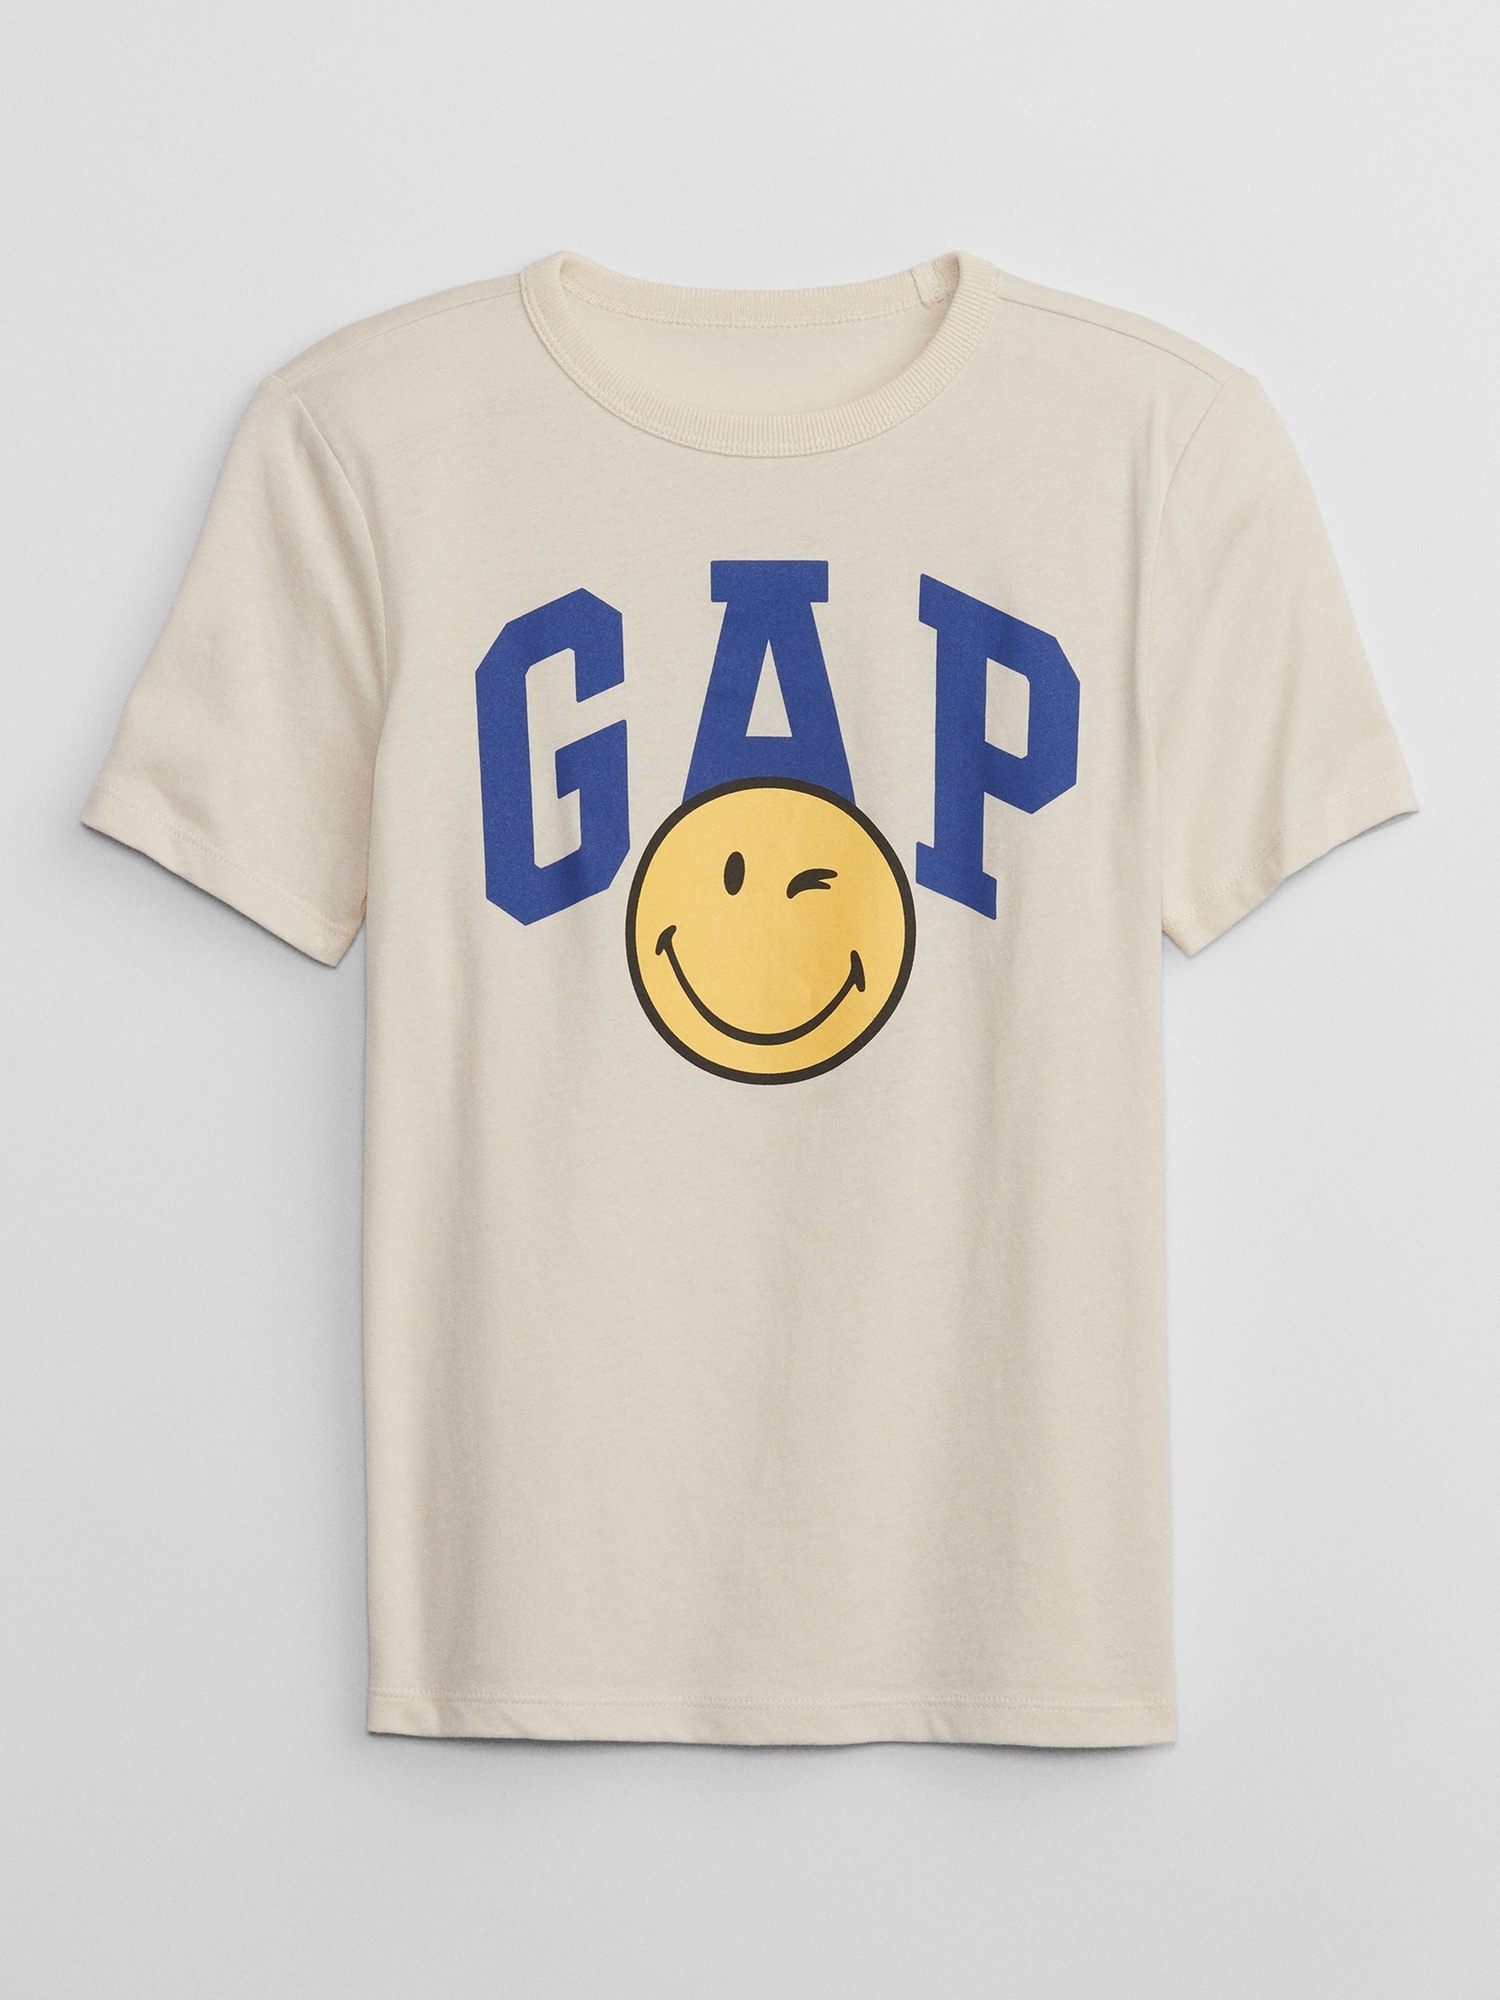 Smiley Face Shirt | Gap Factory